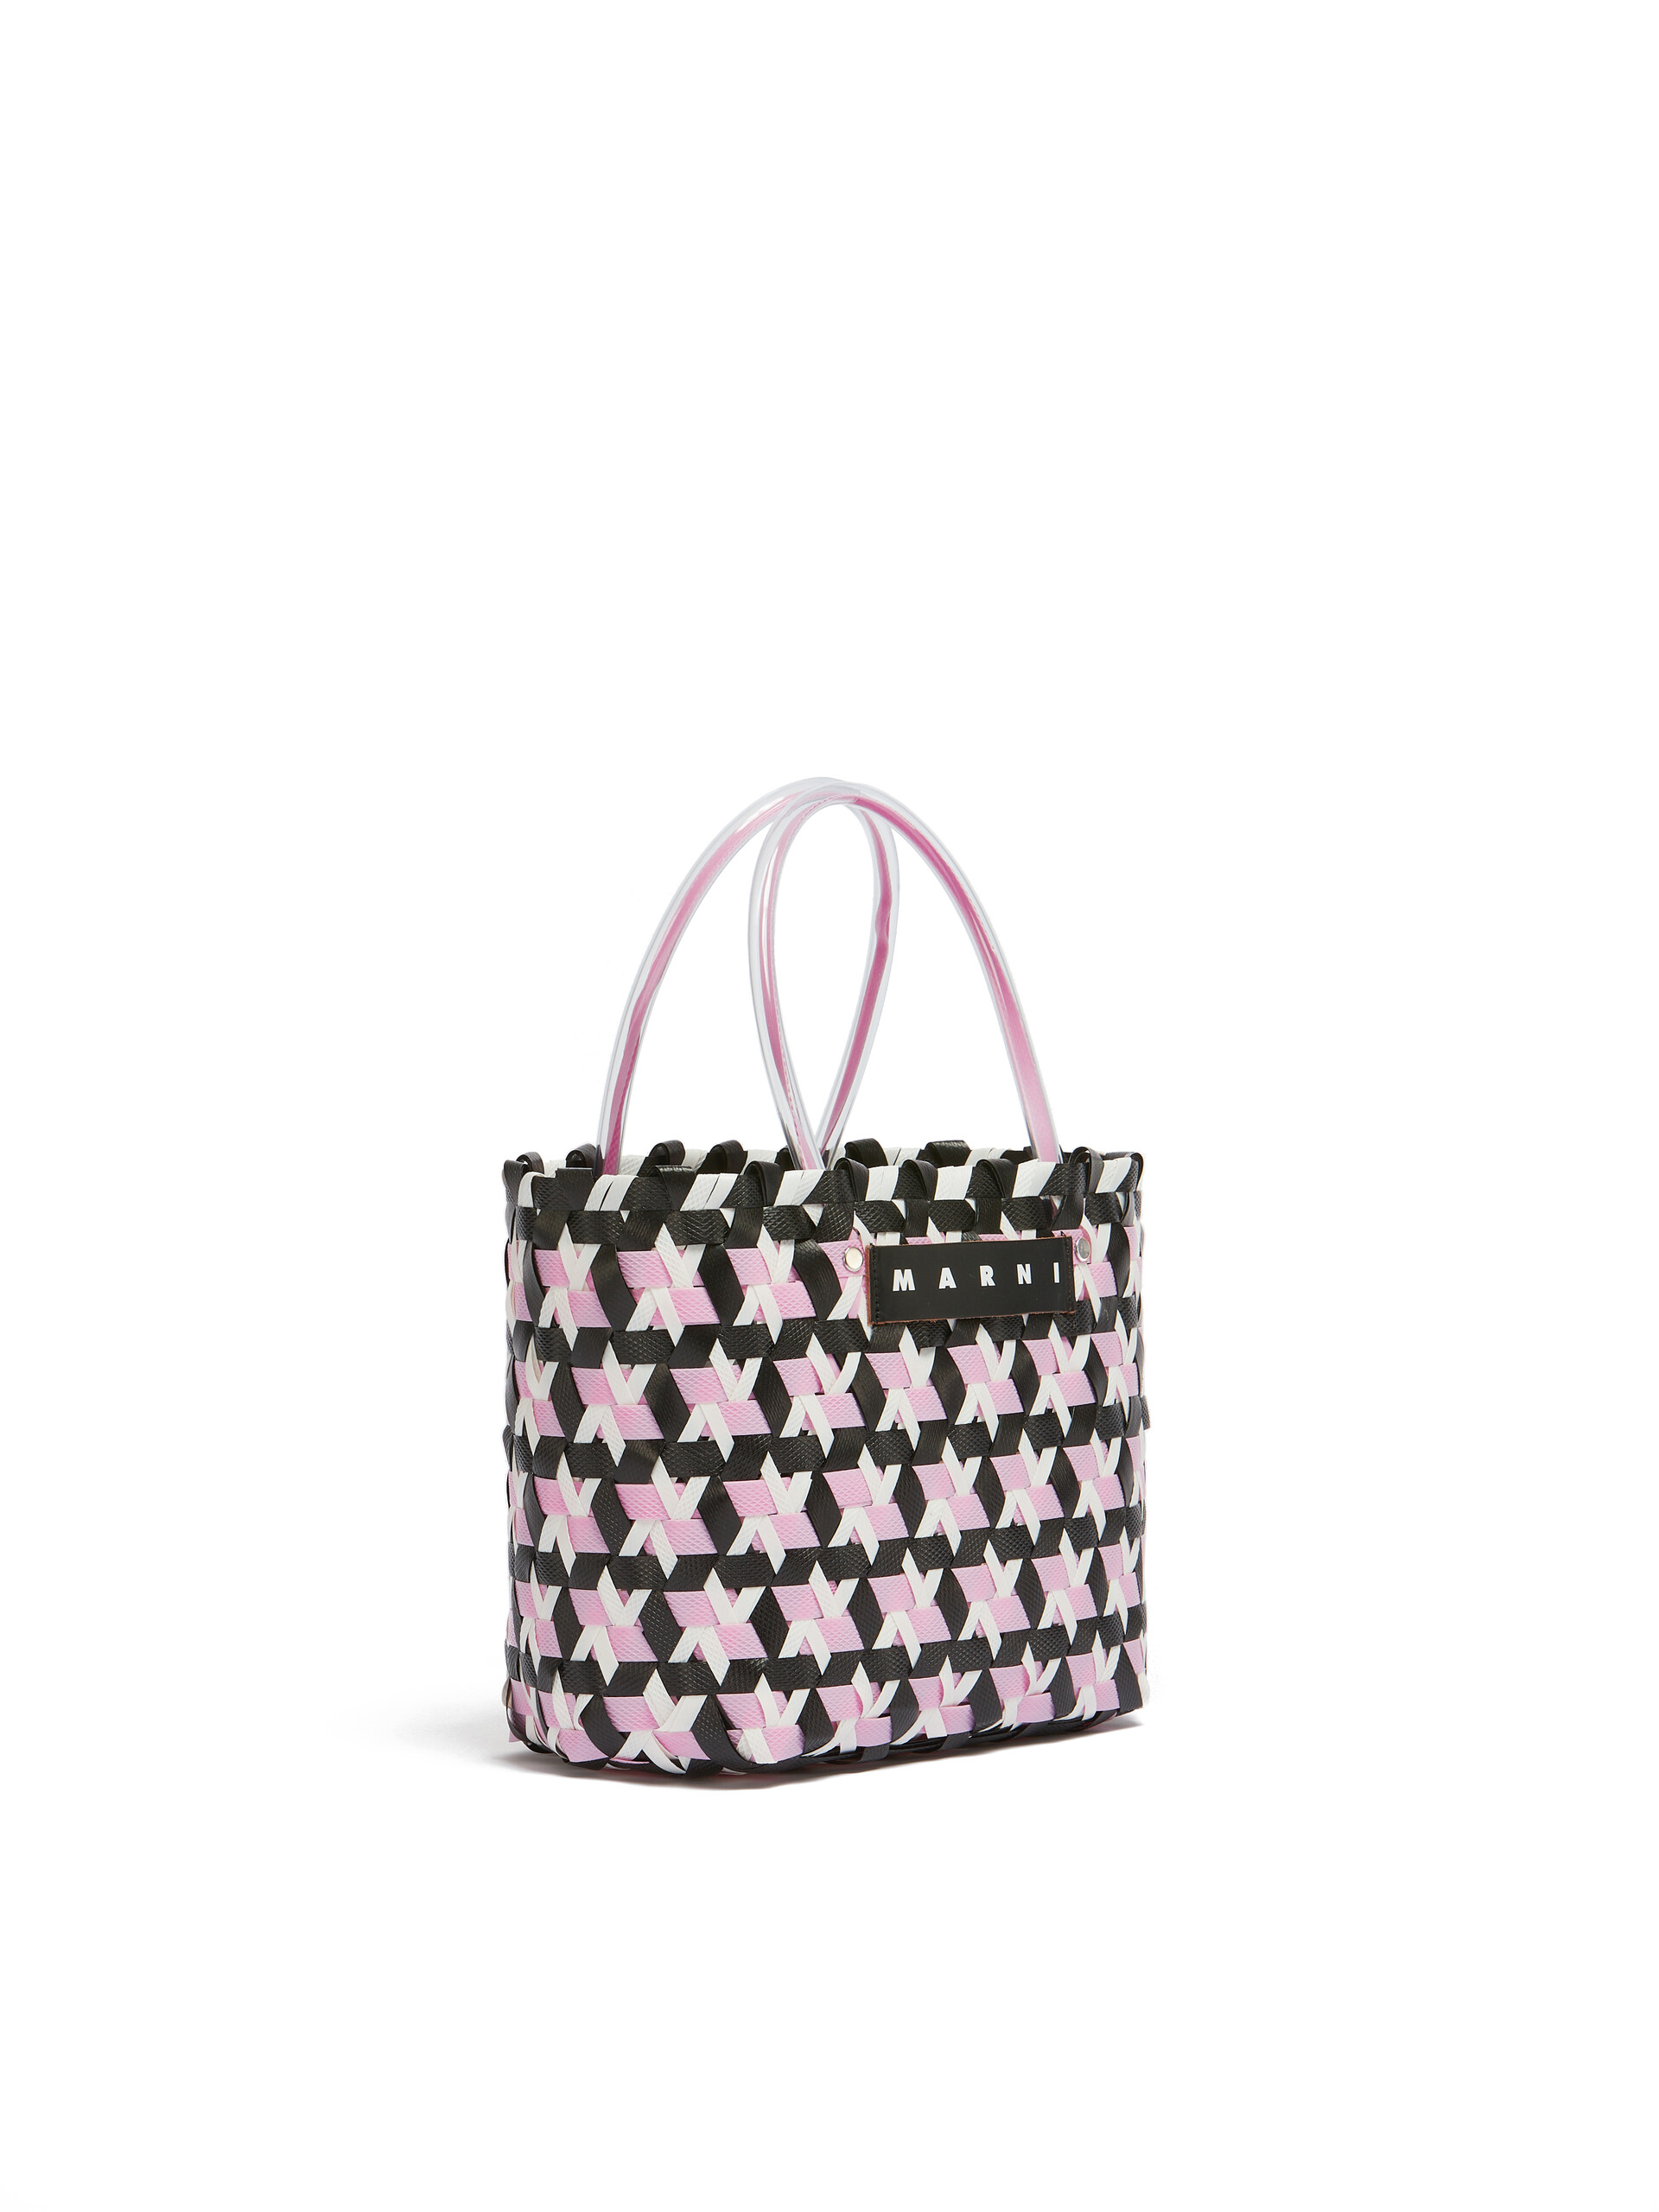 Black tritone MARNI MARKET tote bag - Shopping Bags - Image 2